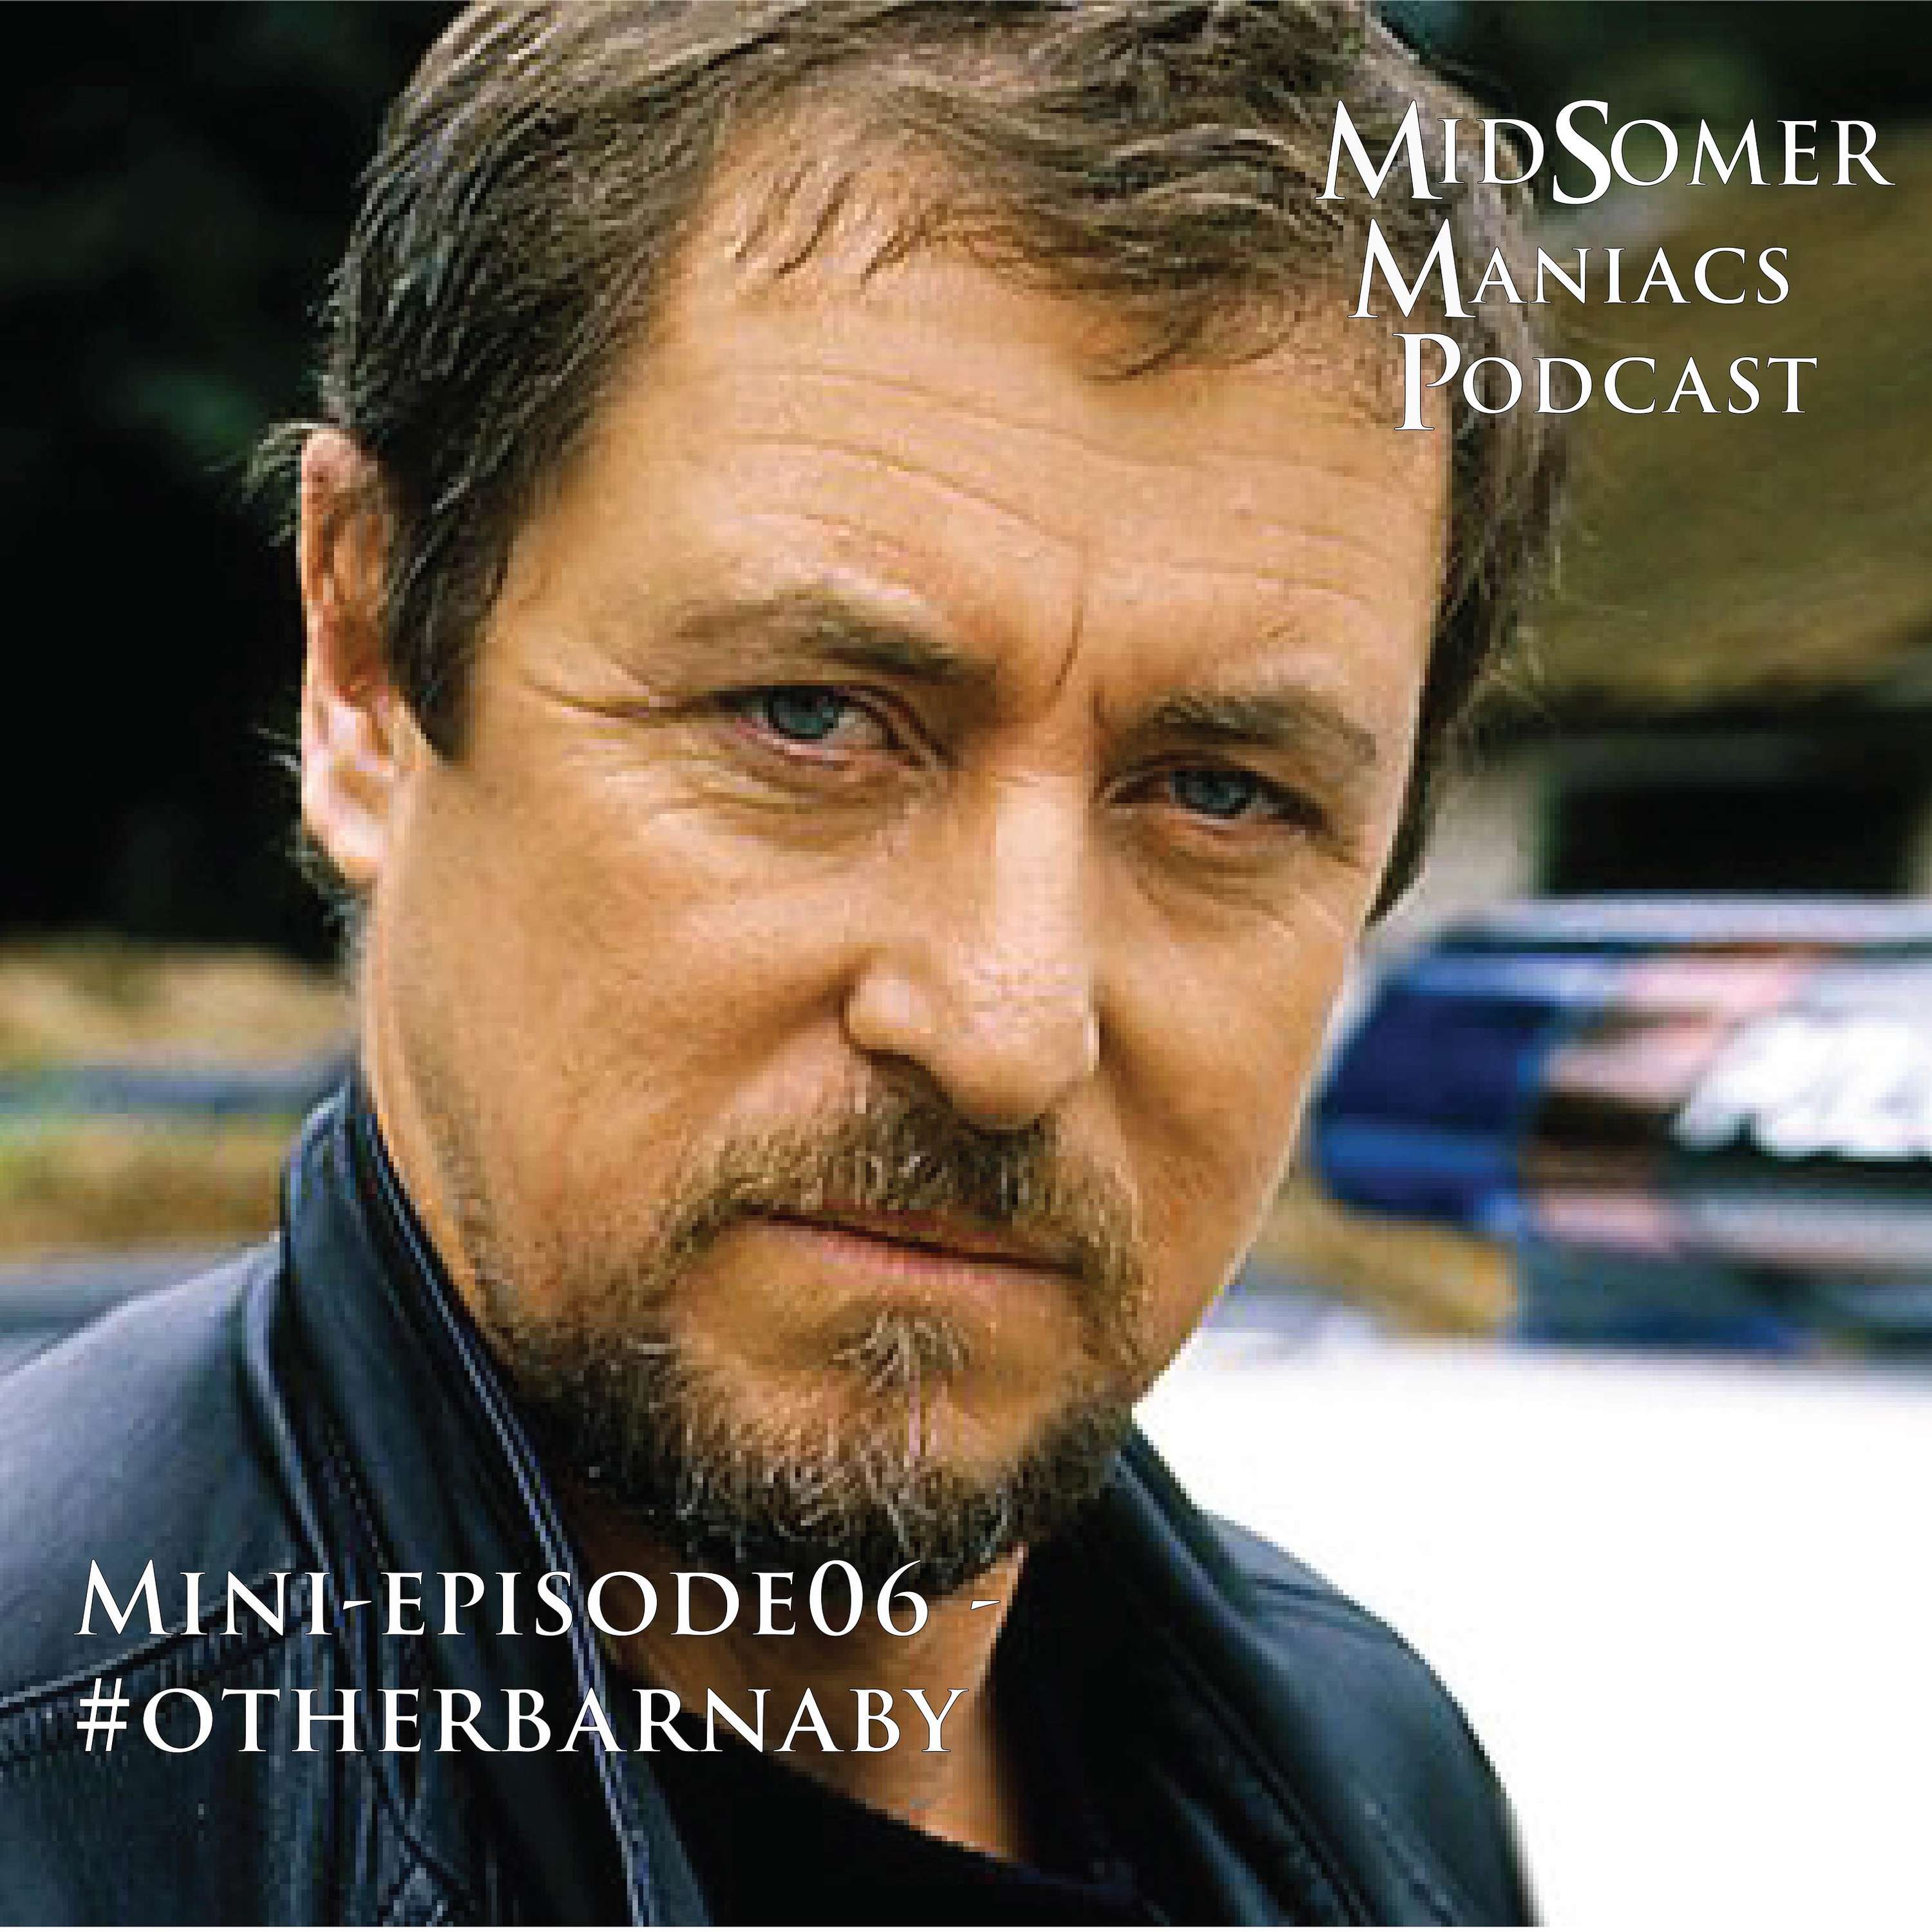 Mini-episode 06 - #otherbarnaby